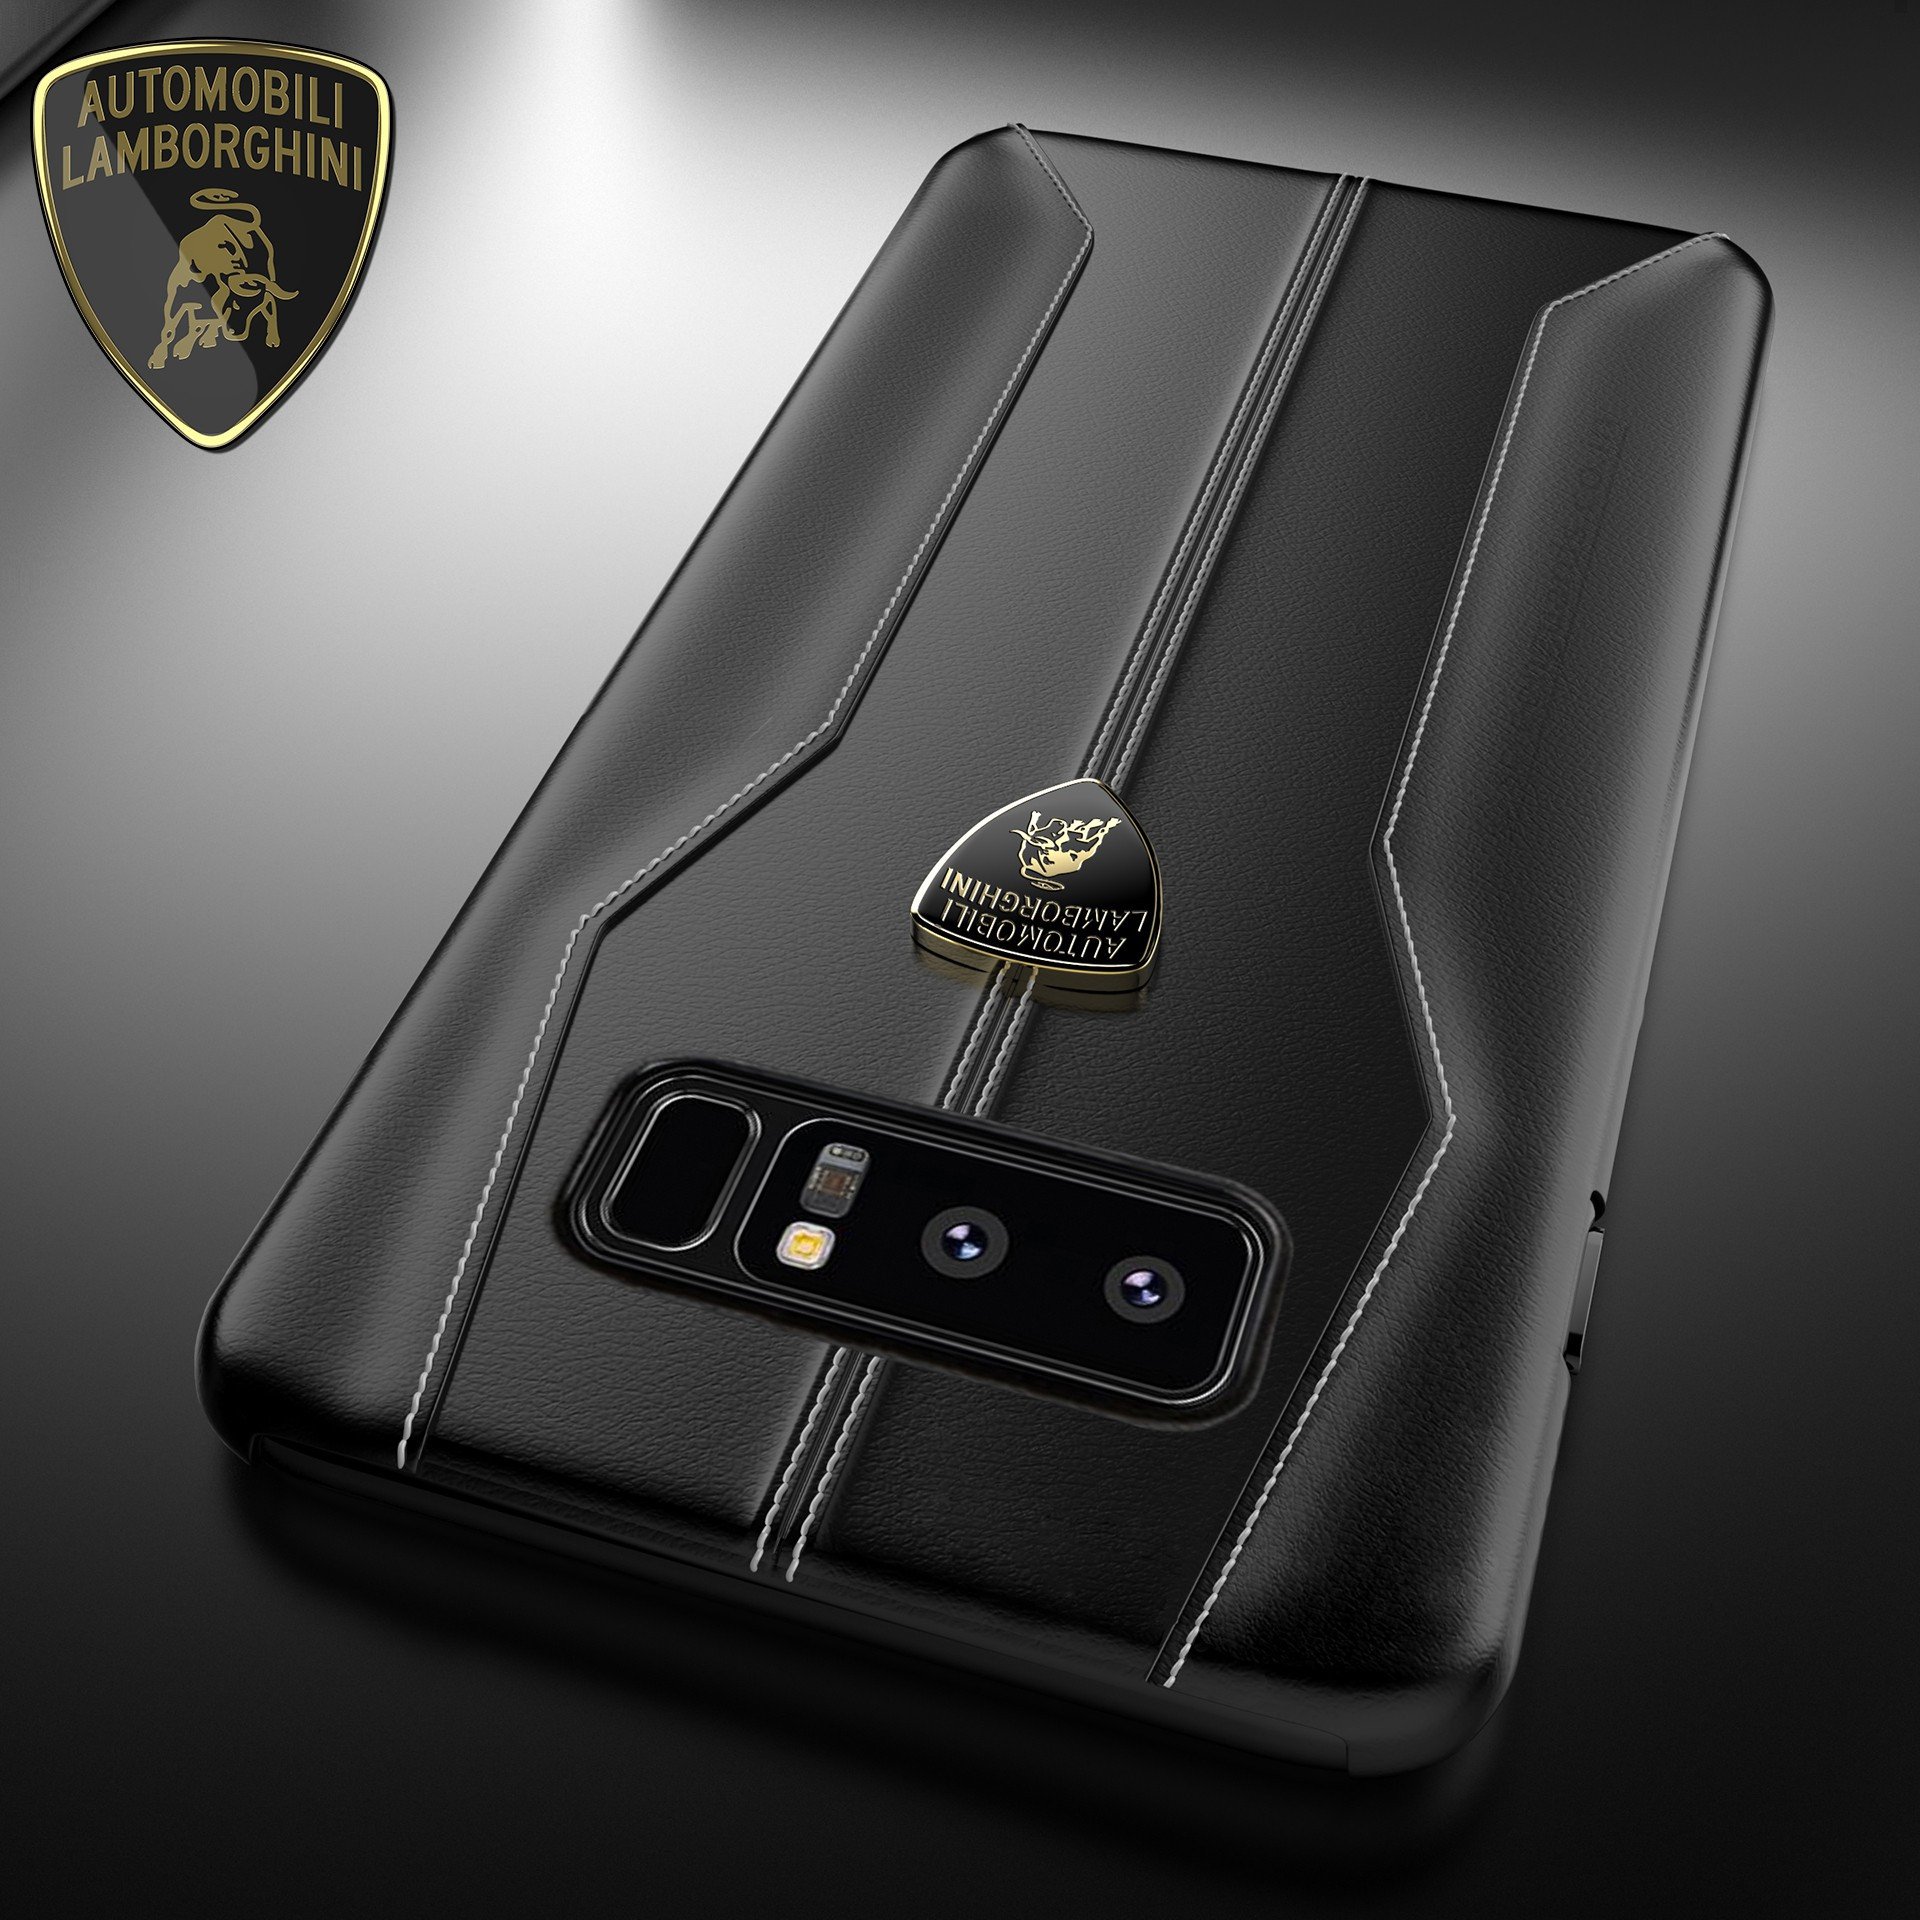 Lamborghini ® Samsung Galaxy Note 8 Official Huracan D1 Series Limited